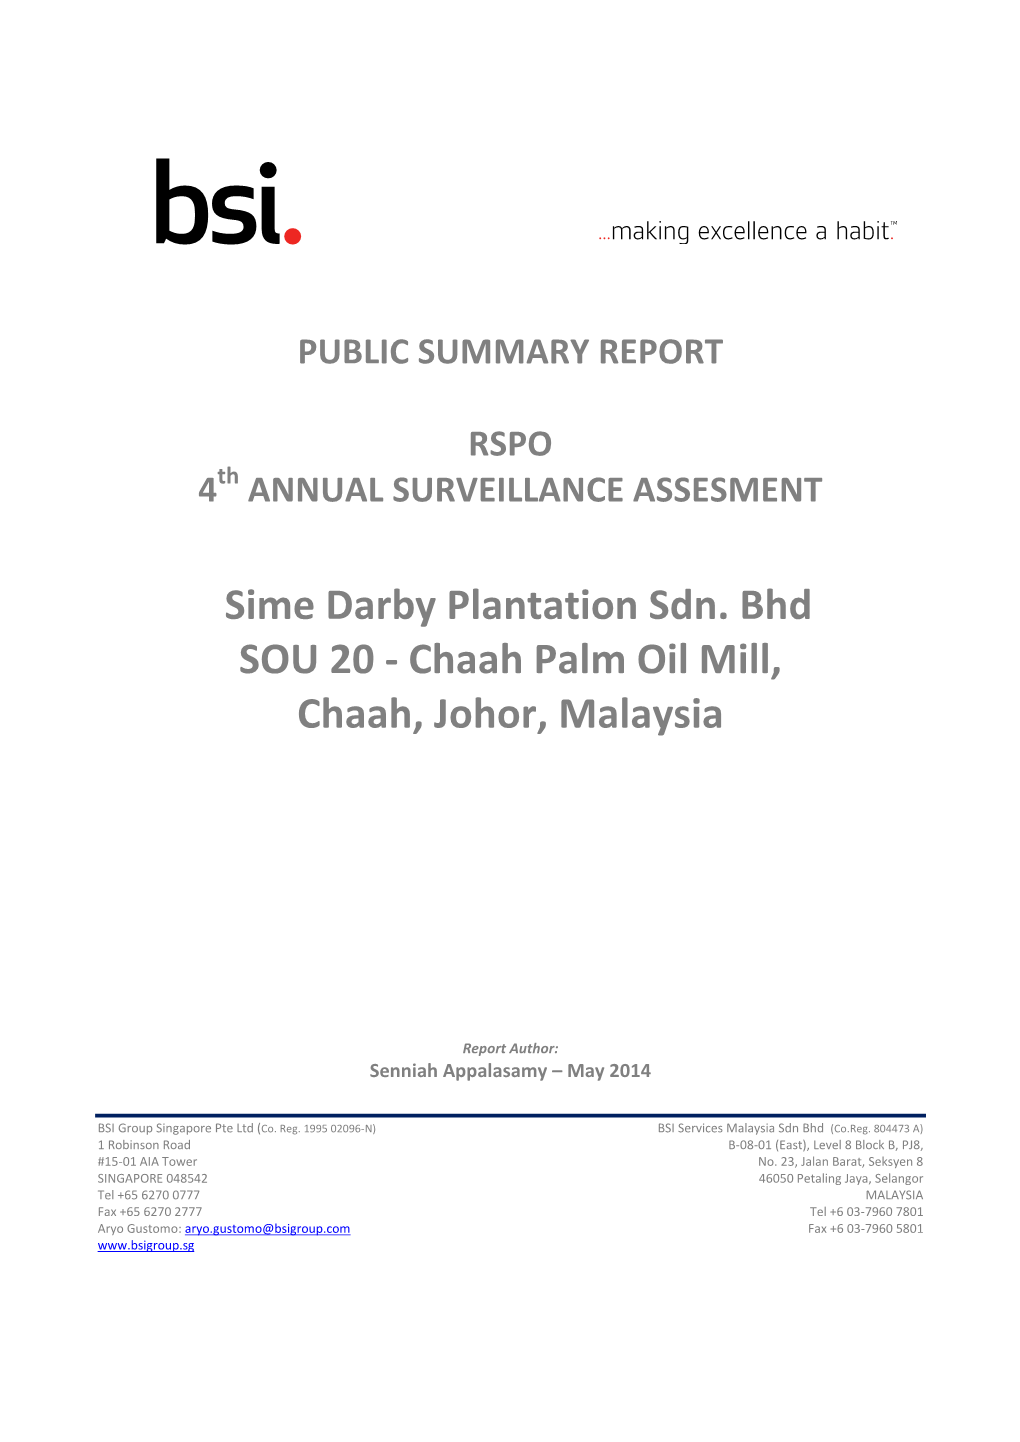 Sime Darby Plantation Sdn. Bhd SOU 20 - Chaah Palm Oil Mill, Chaah, Johor, Malaysia